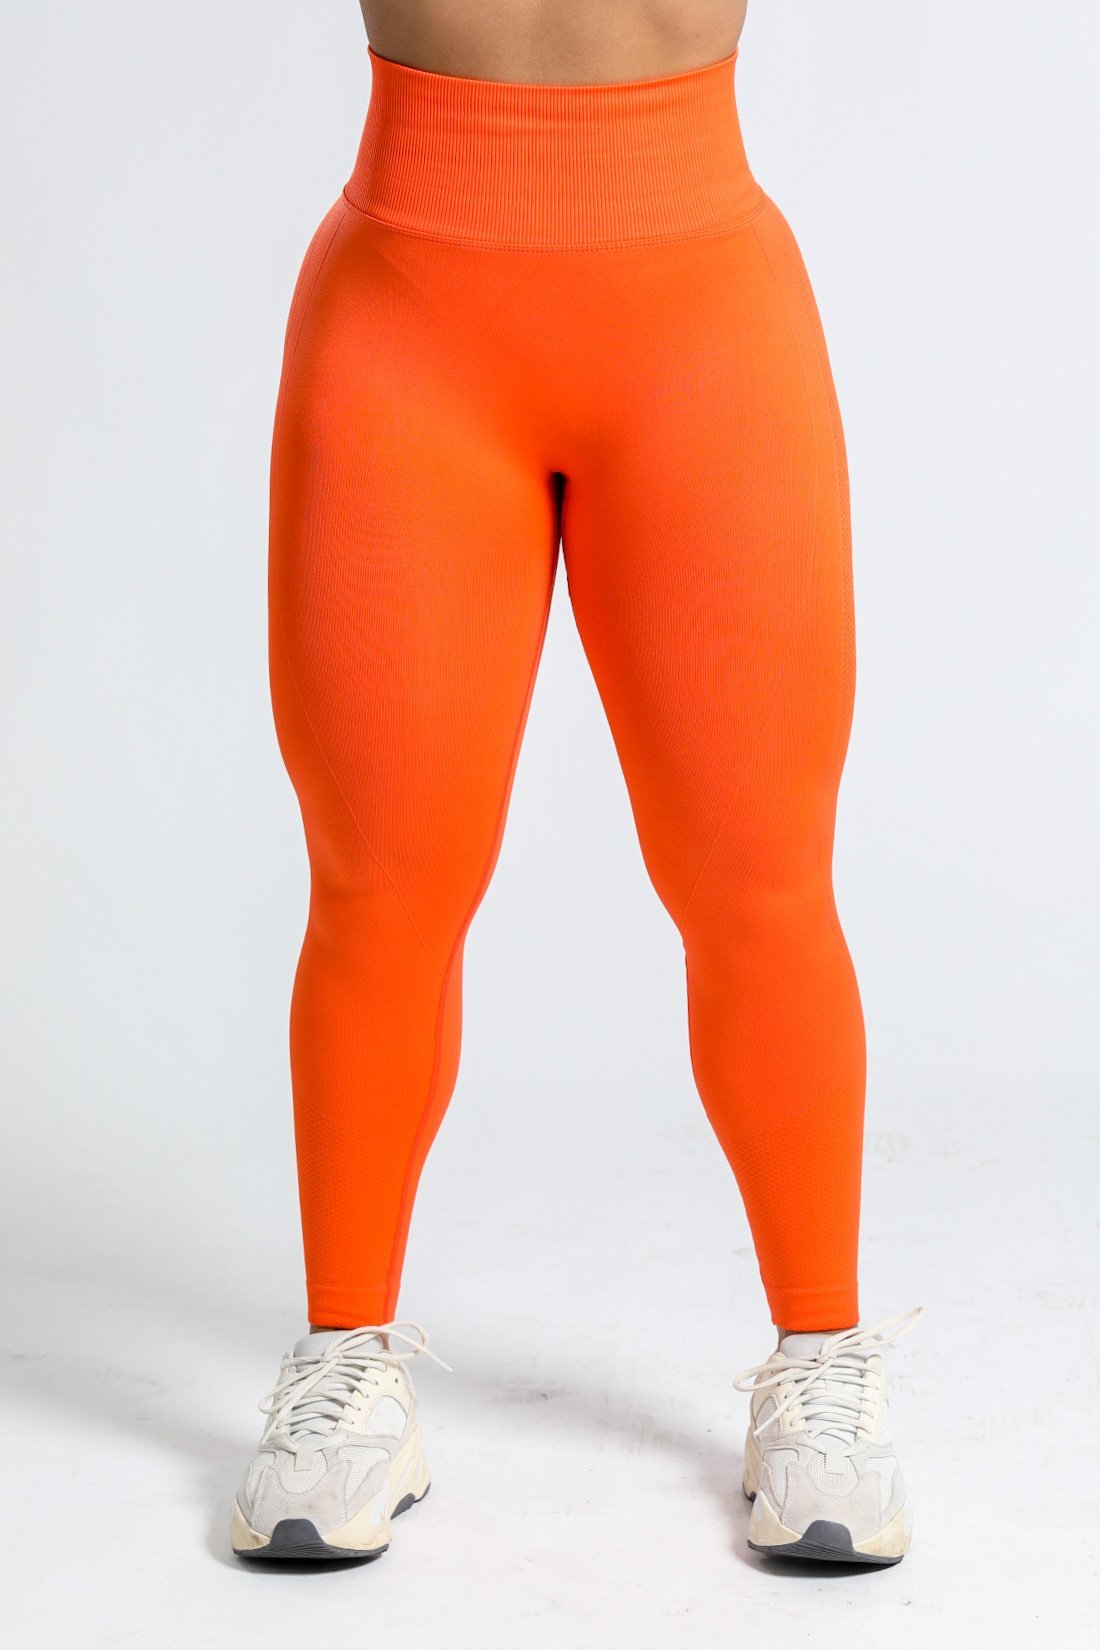 The Jogg Concept JCSABELA Leggings Orange.com – Shop Orange.com JCSABELA  Leggings from size XS-XXL